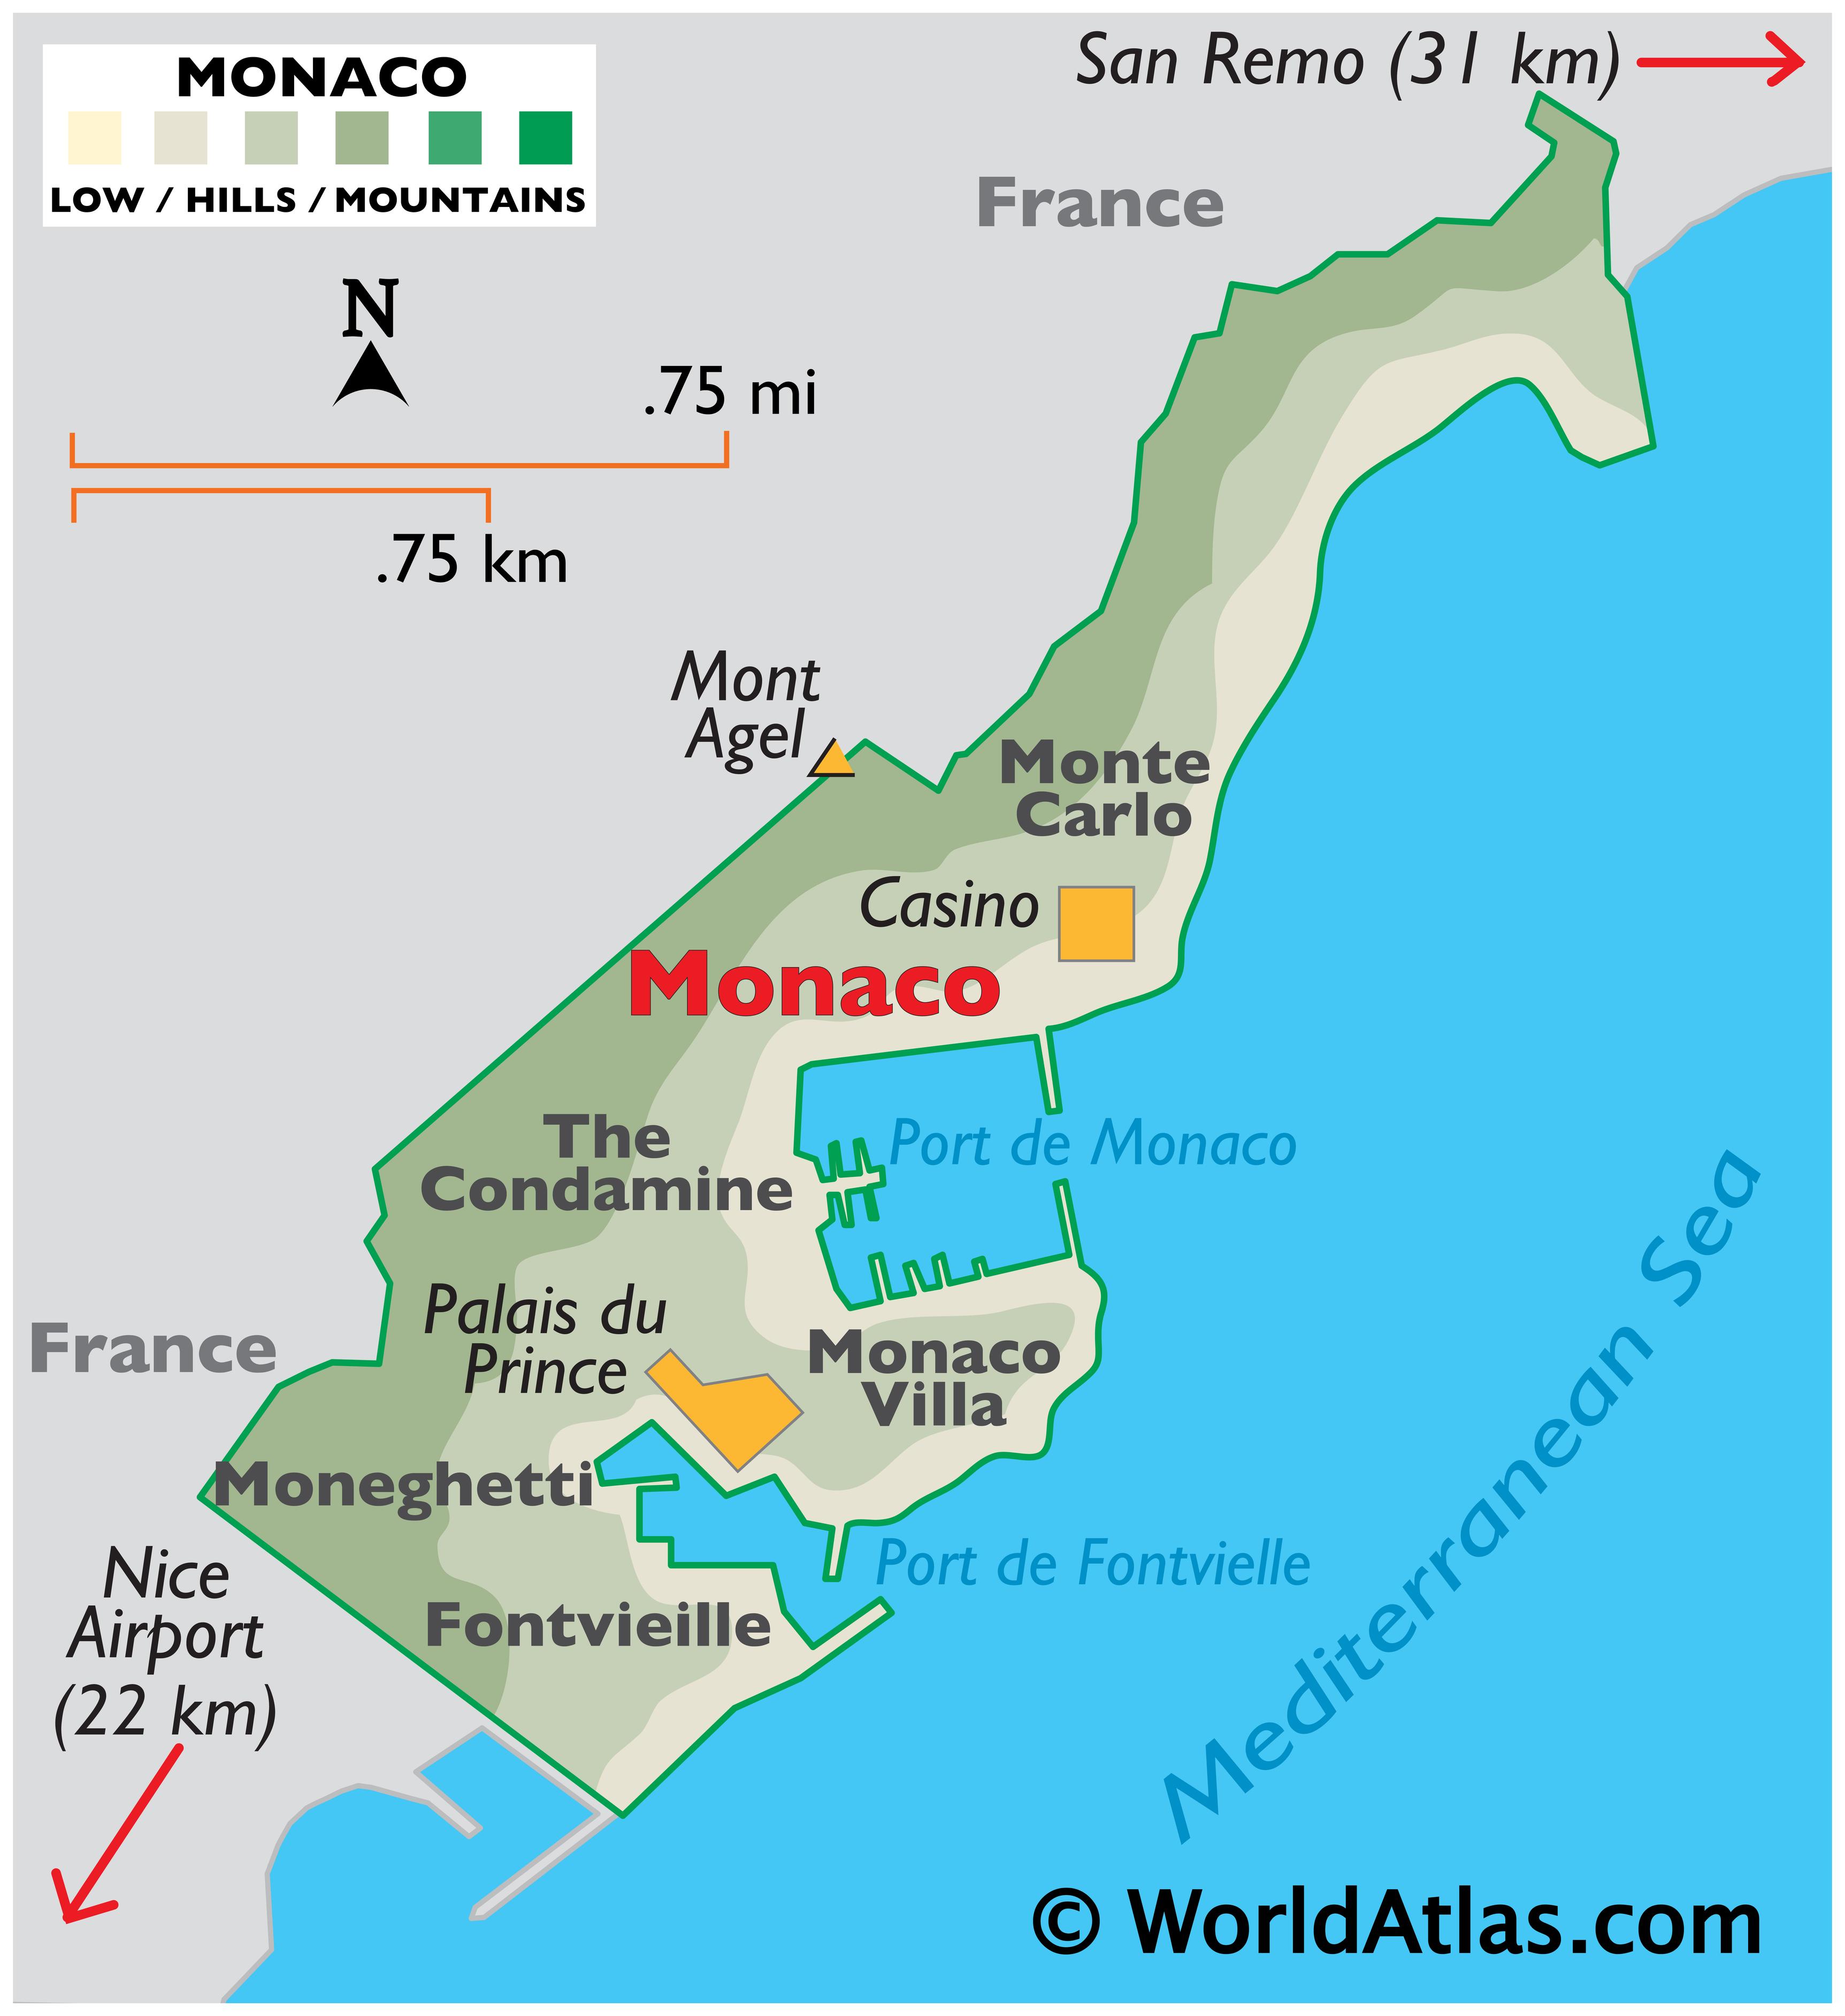 monaco karta Monaco Map / Geography of Monaco / Map of Monaco   Worldatlas.com monaco karta